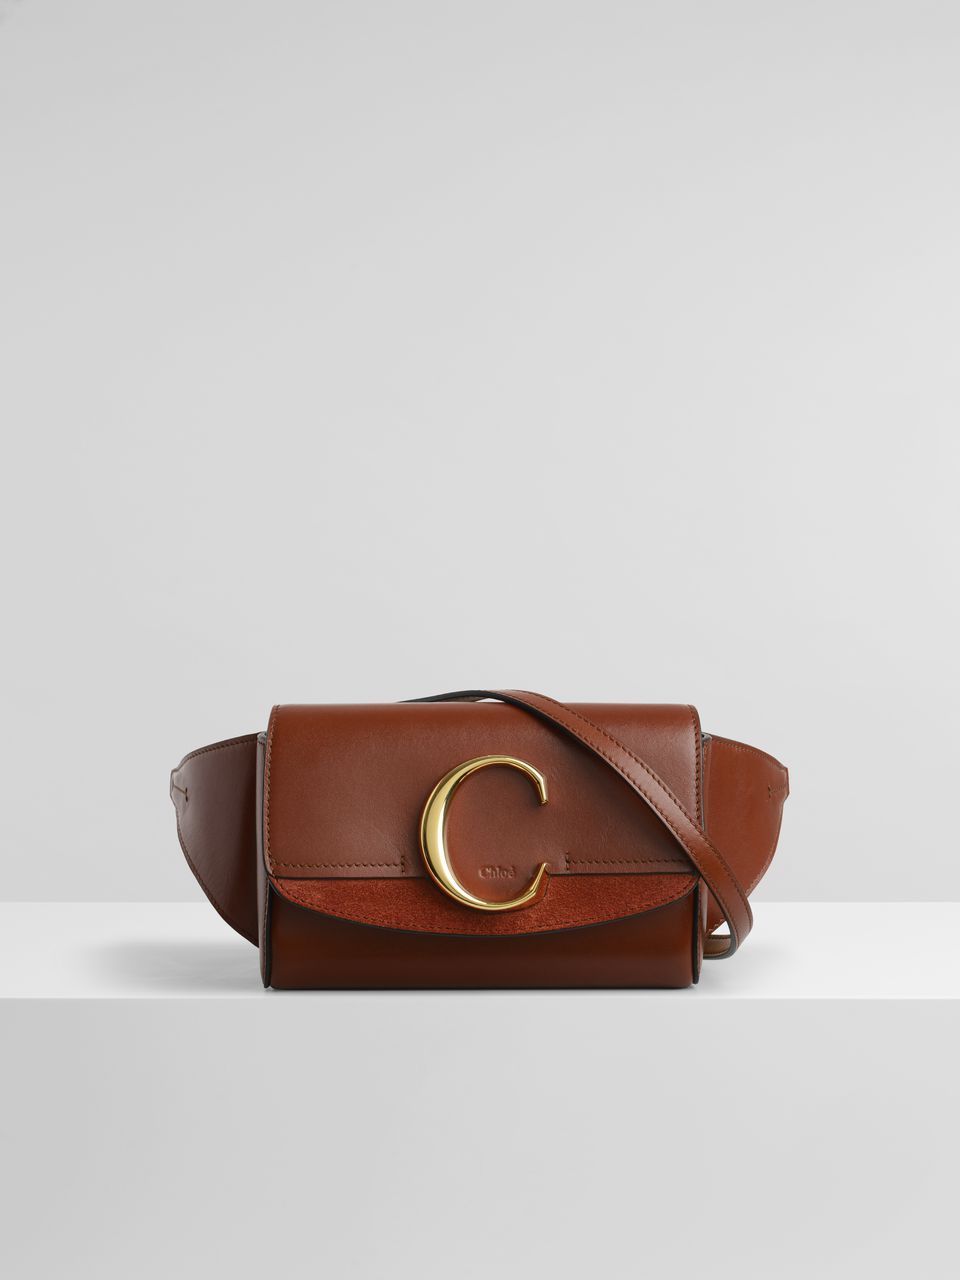 Introducing The Chloé C Bag - PurseBlog